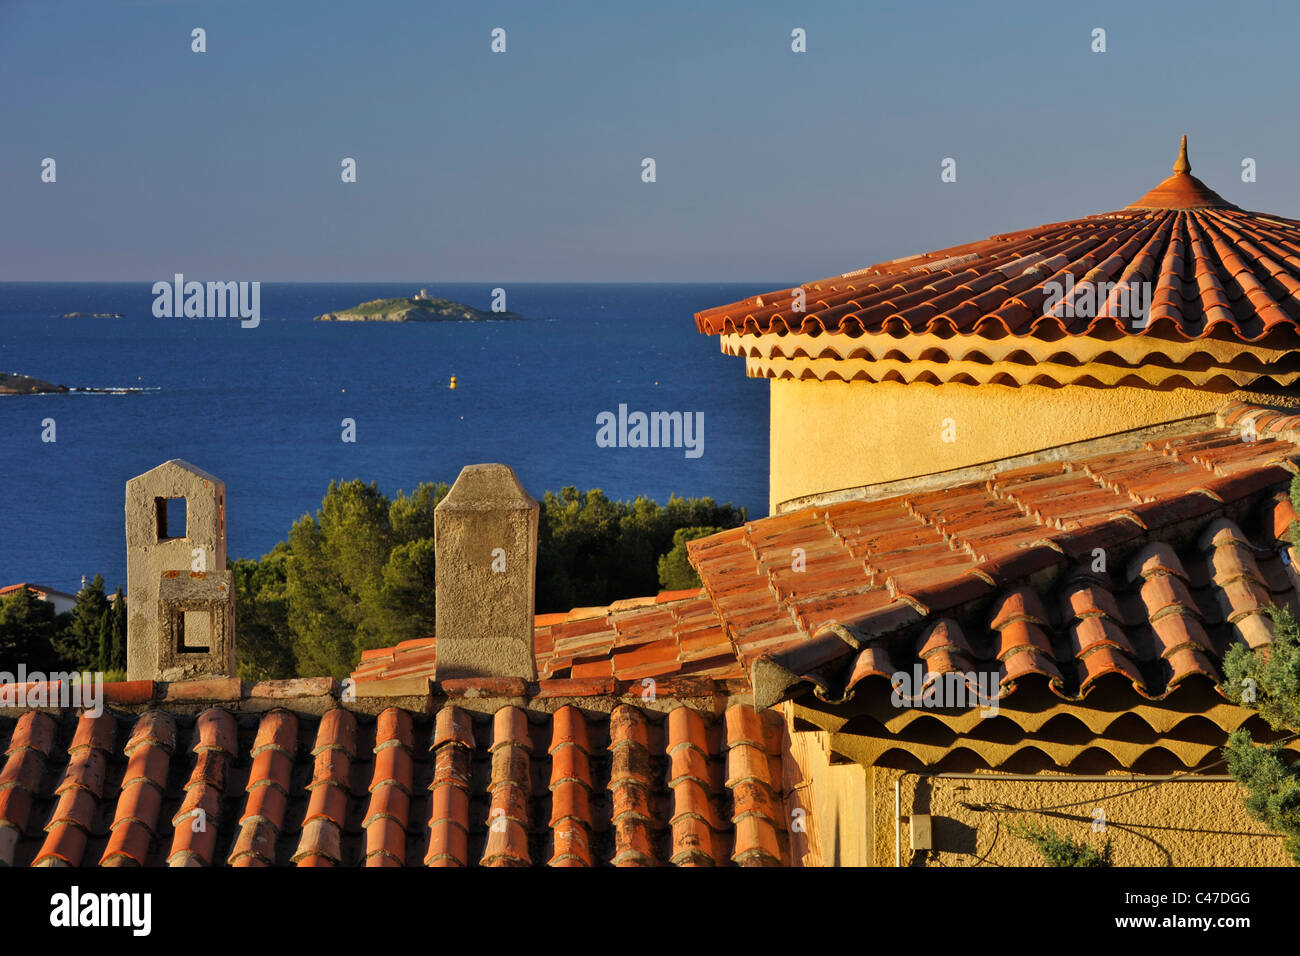 Roof tiles roofing roman fotografías e imágenes de alta resolución - Alamy